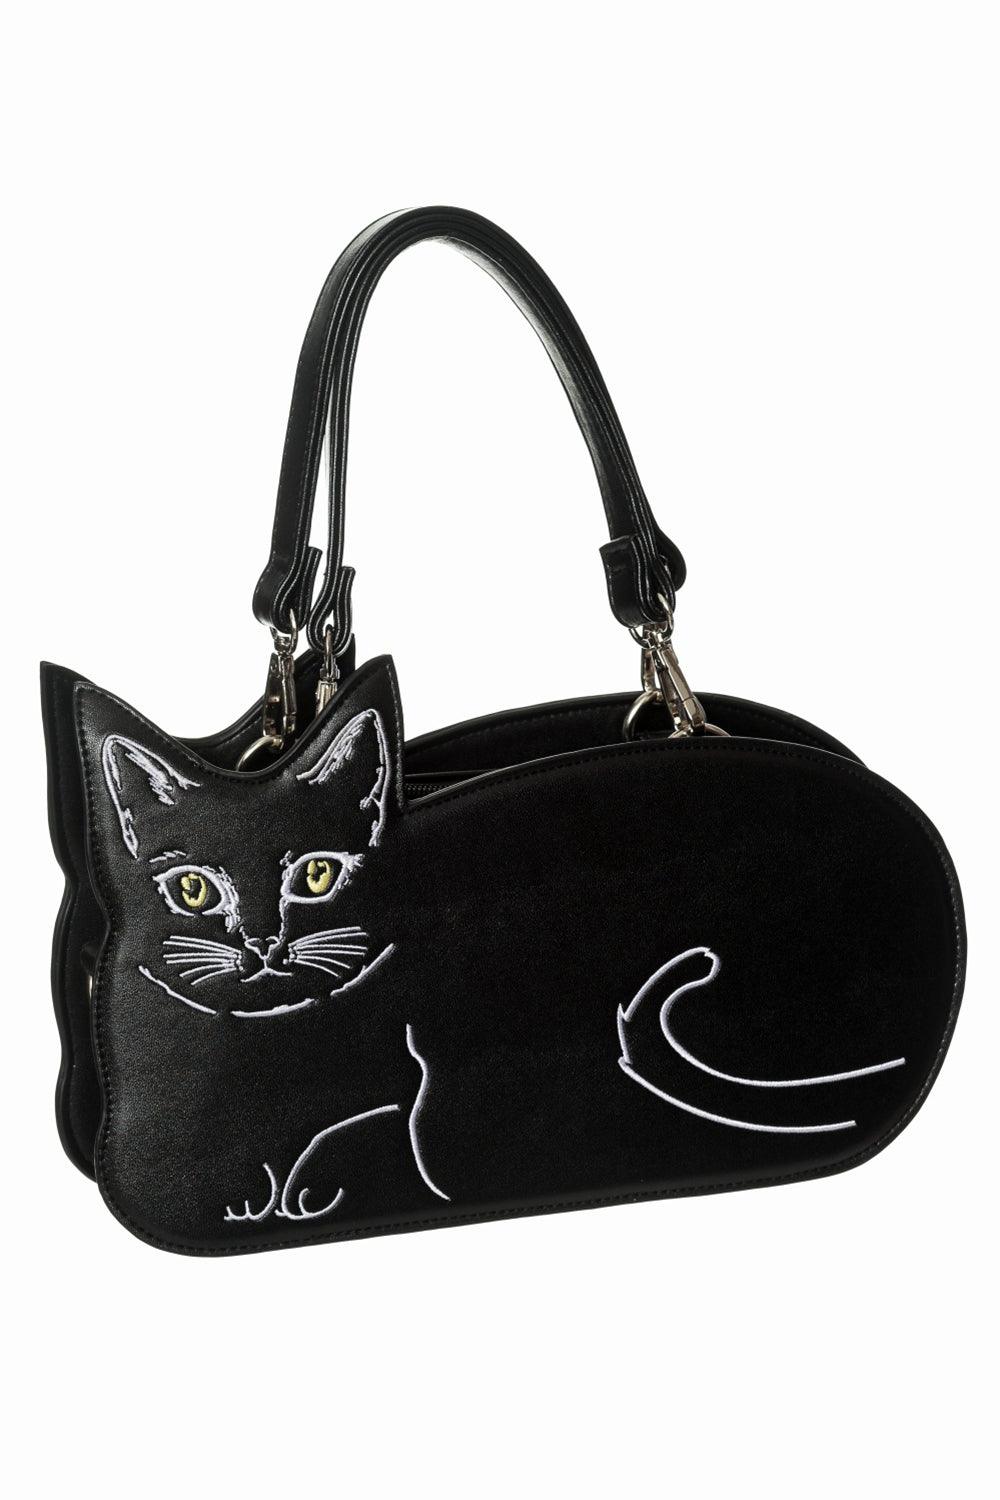 Banned Apparel Creepy Cat Lady Bag - VampireFreaks